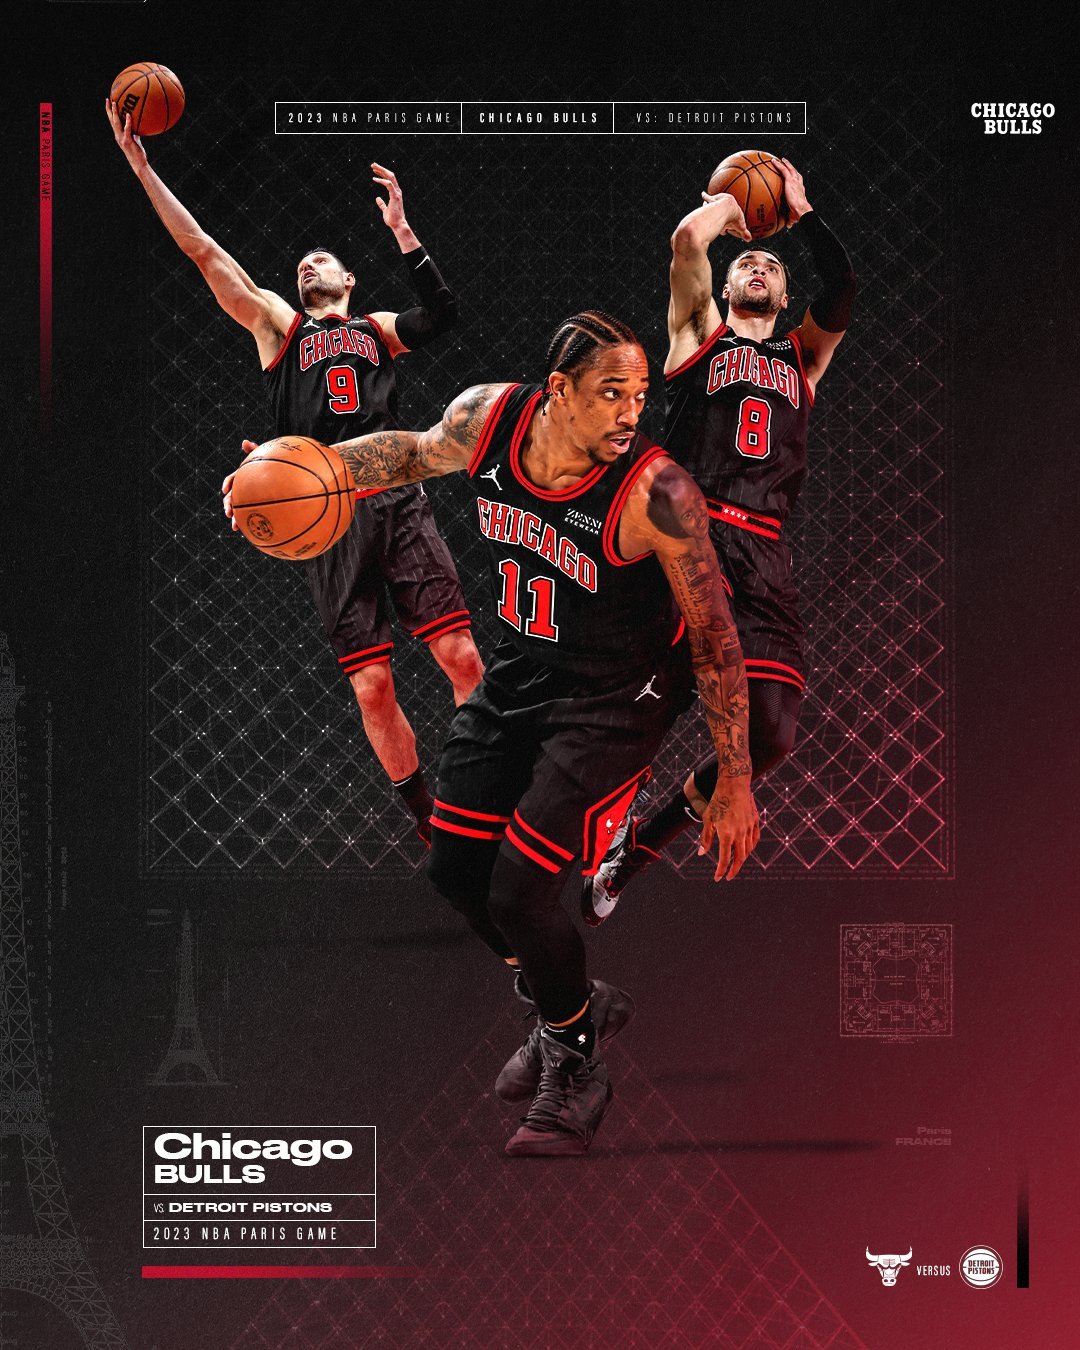 Chicago Bulls: We're going to Paris!